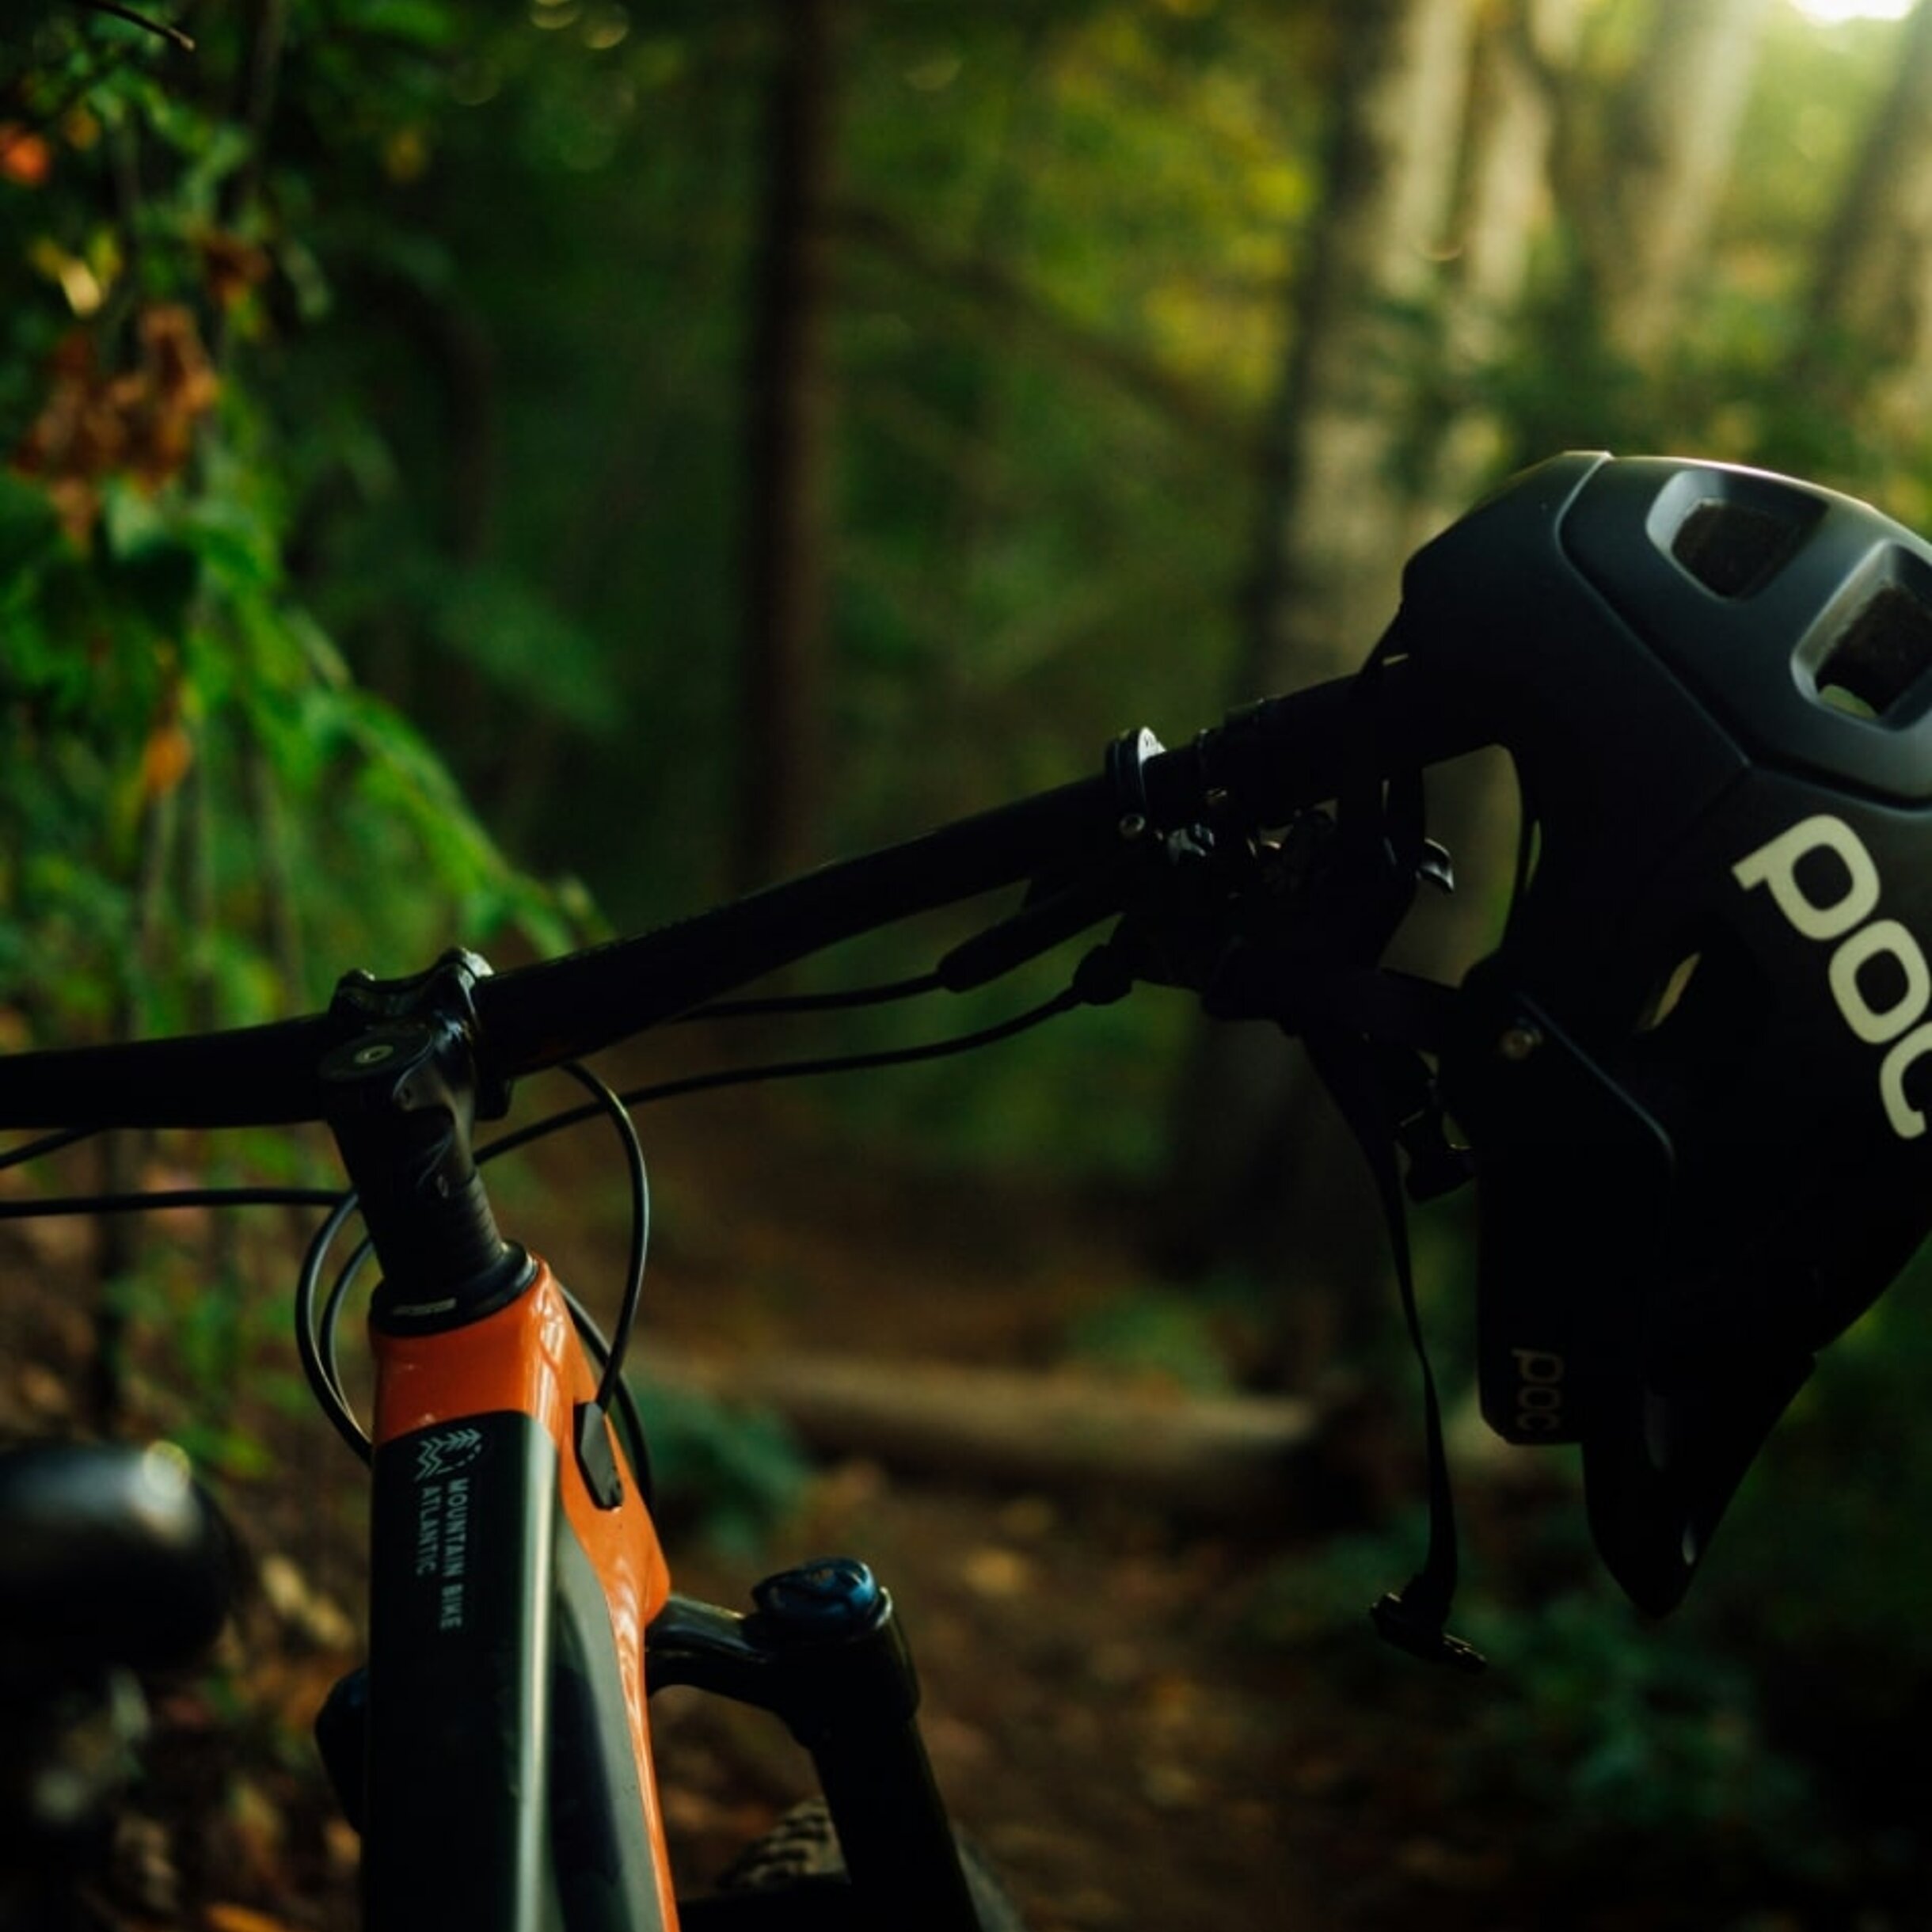 pedal through scenic trails